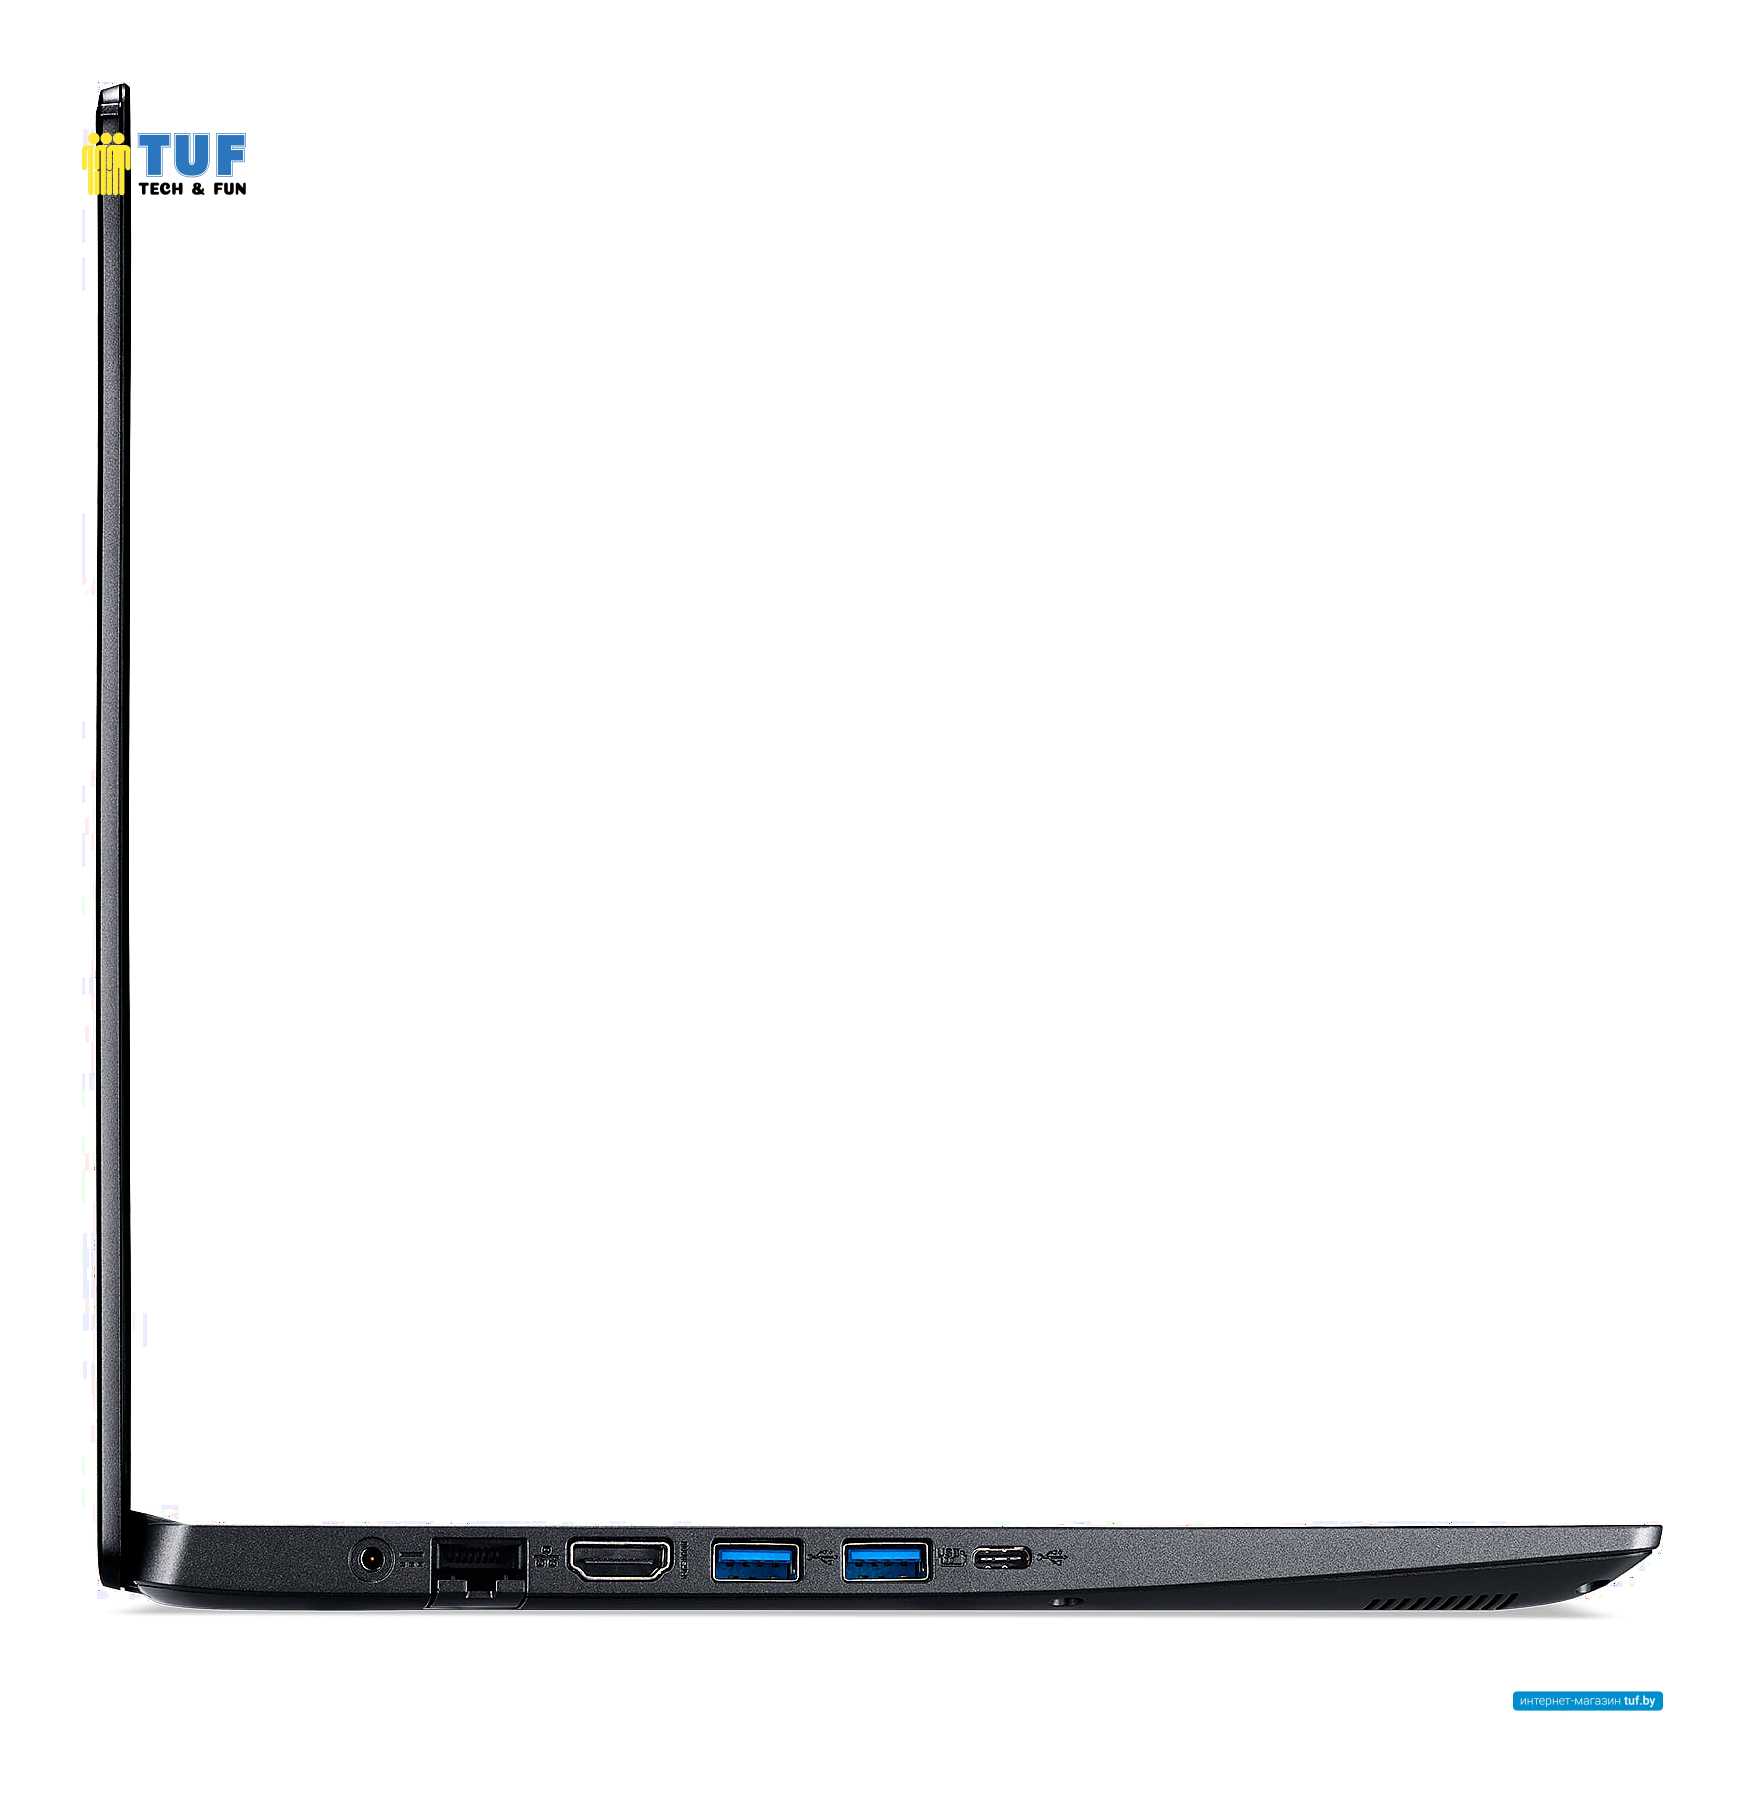 Ноутбук Acer Aspire 5 A514-53-504D NX.HURER.005